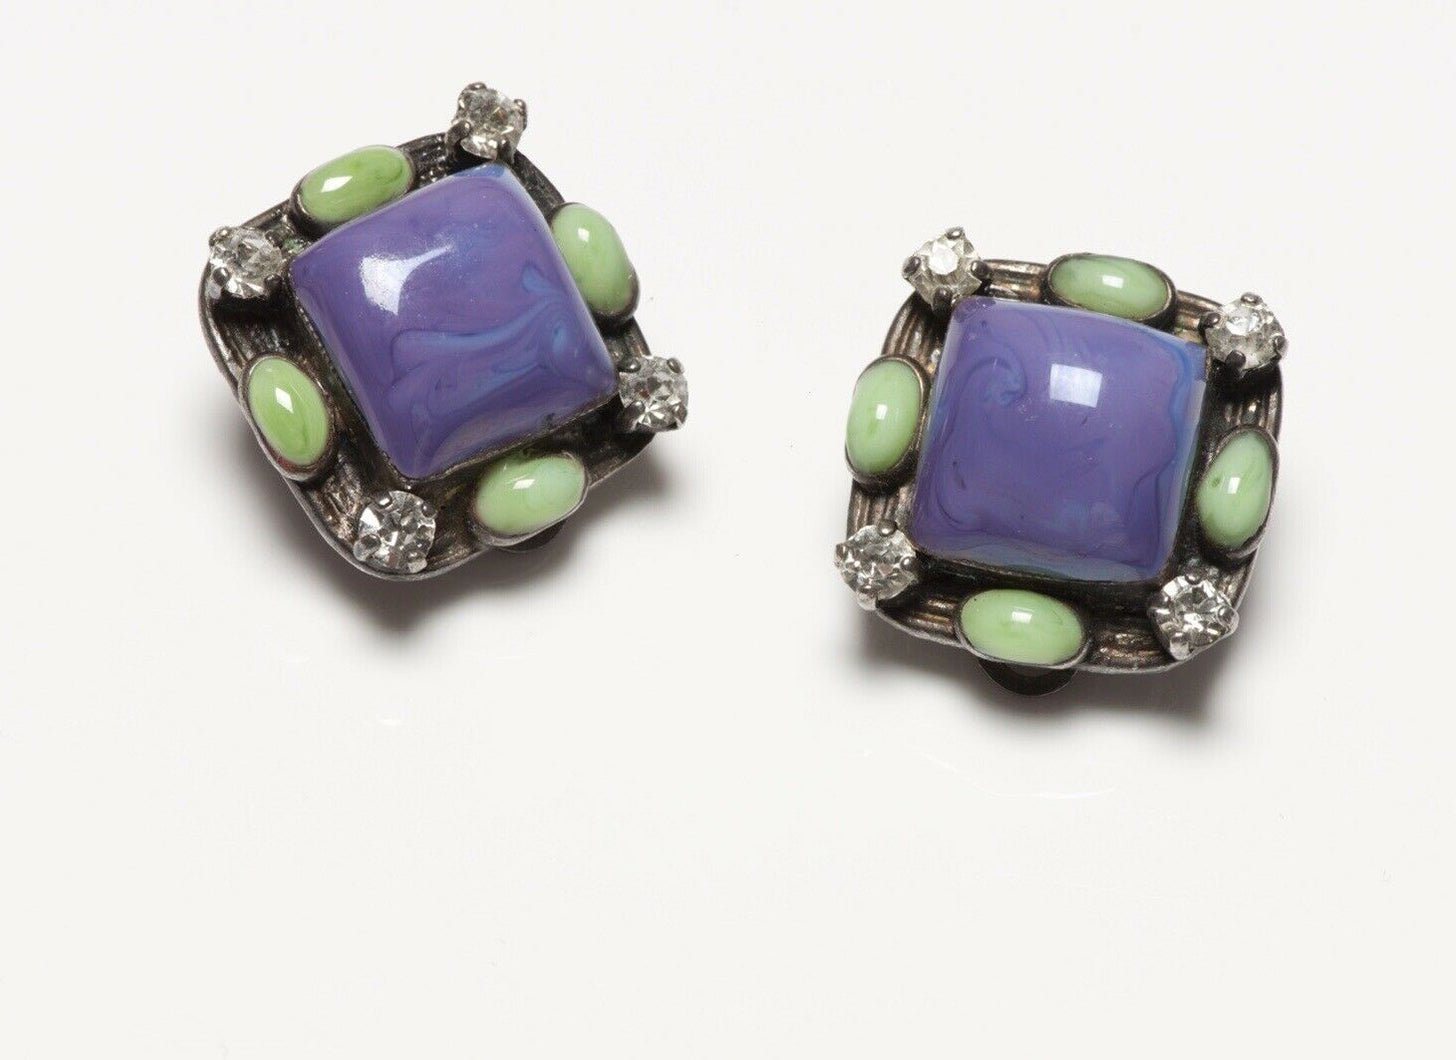 CHANEL Spring 1996 Gripoix Purple Green Poured Glass Earrings